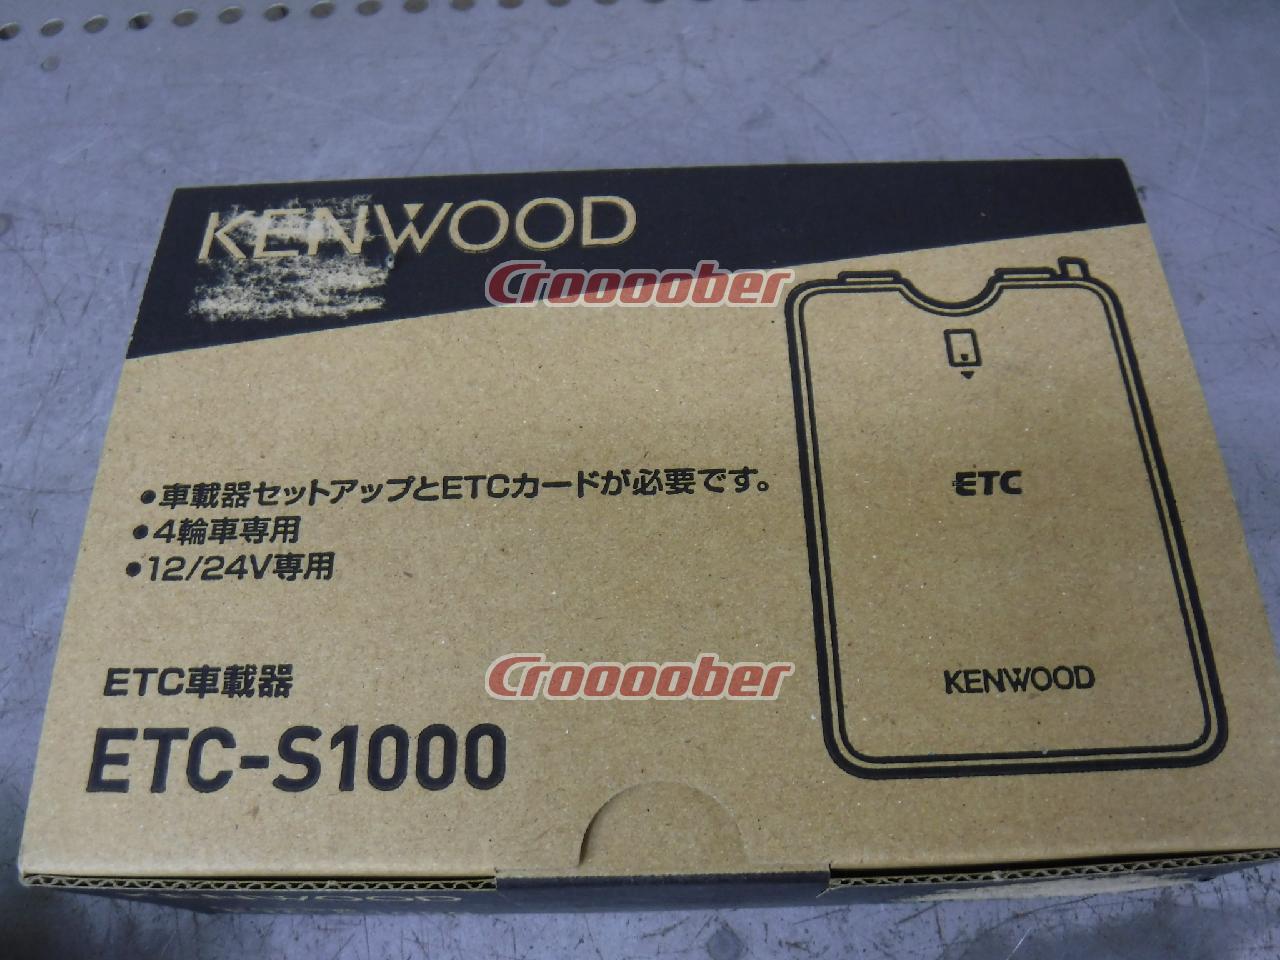 KENWOOD ETC-S1000 | ETC アンテナ分離型パーツの通販なら | Croooober(クルーバー)